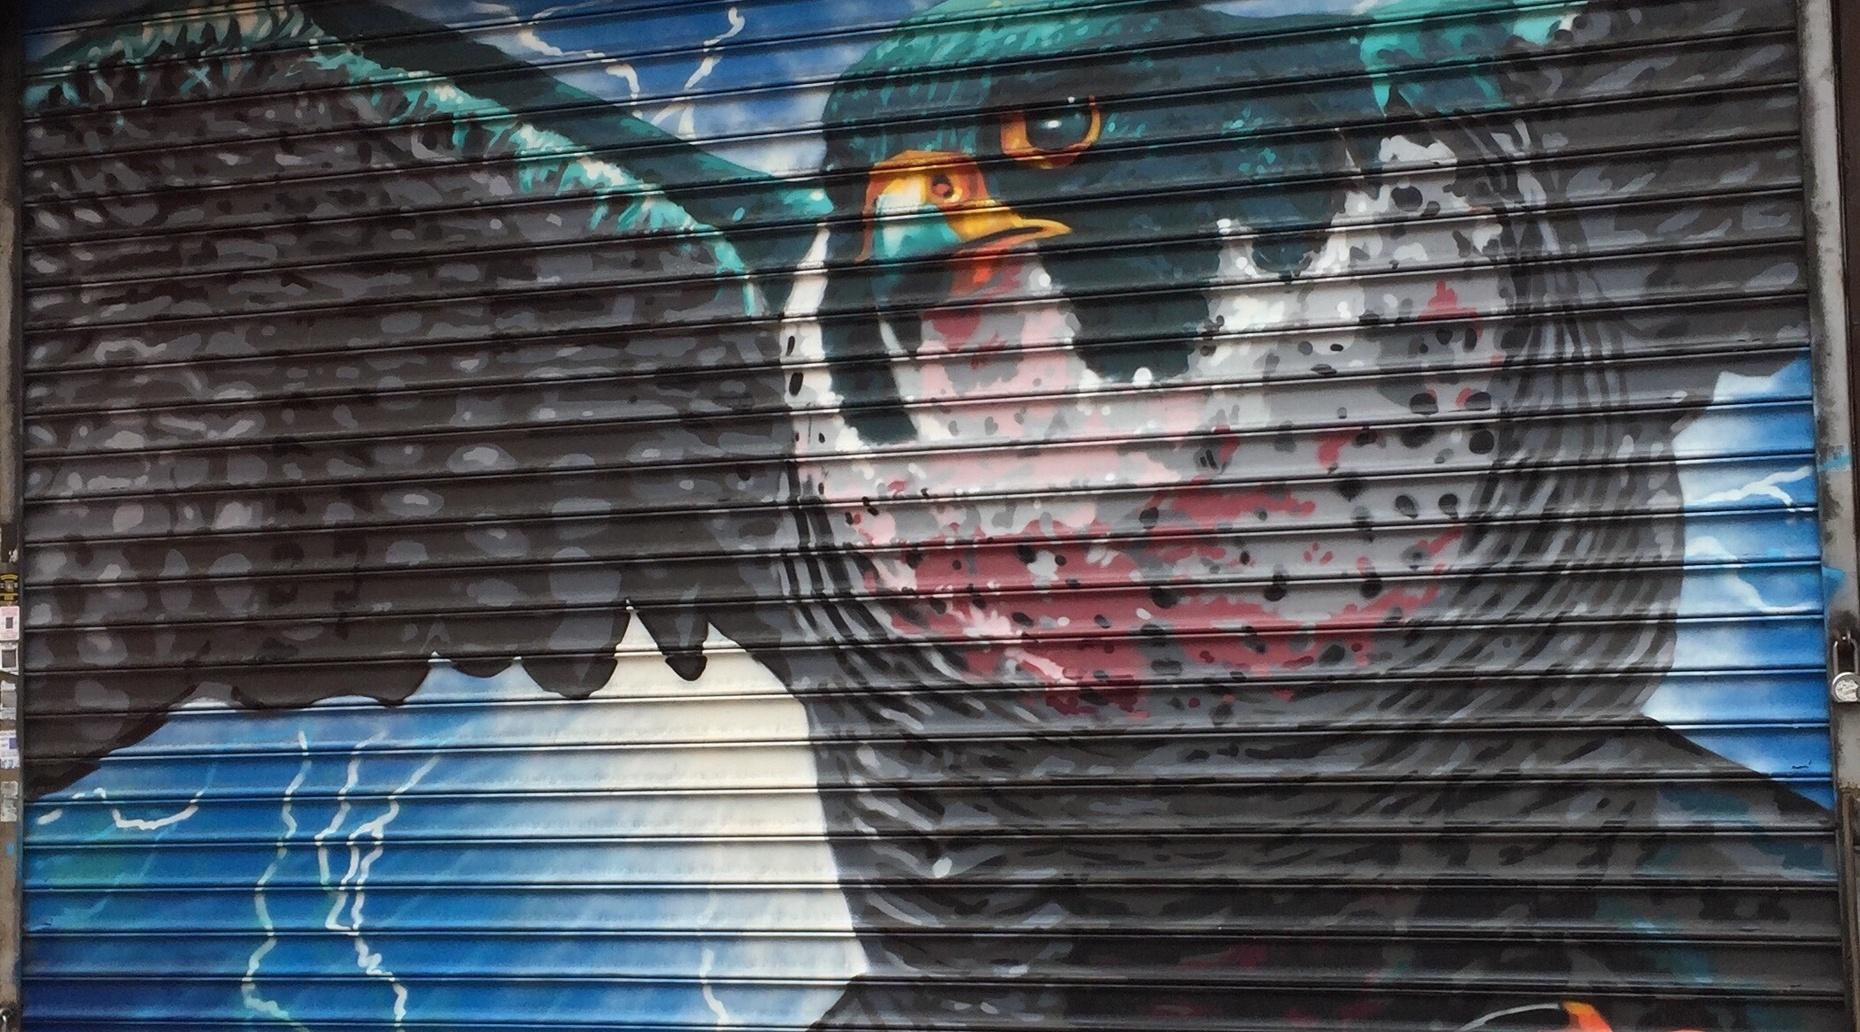 Audubon Bird Mural Project walking tour